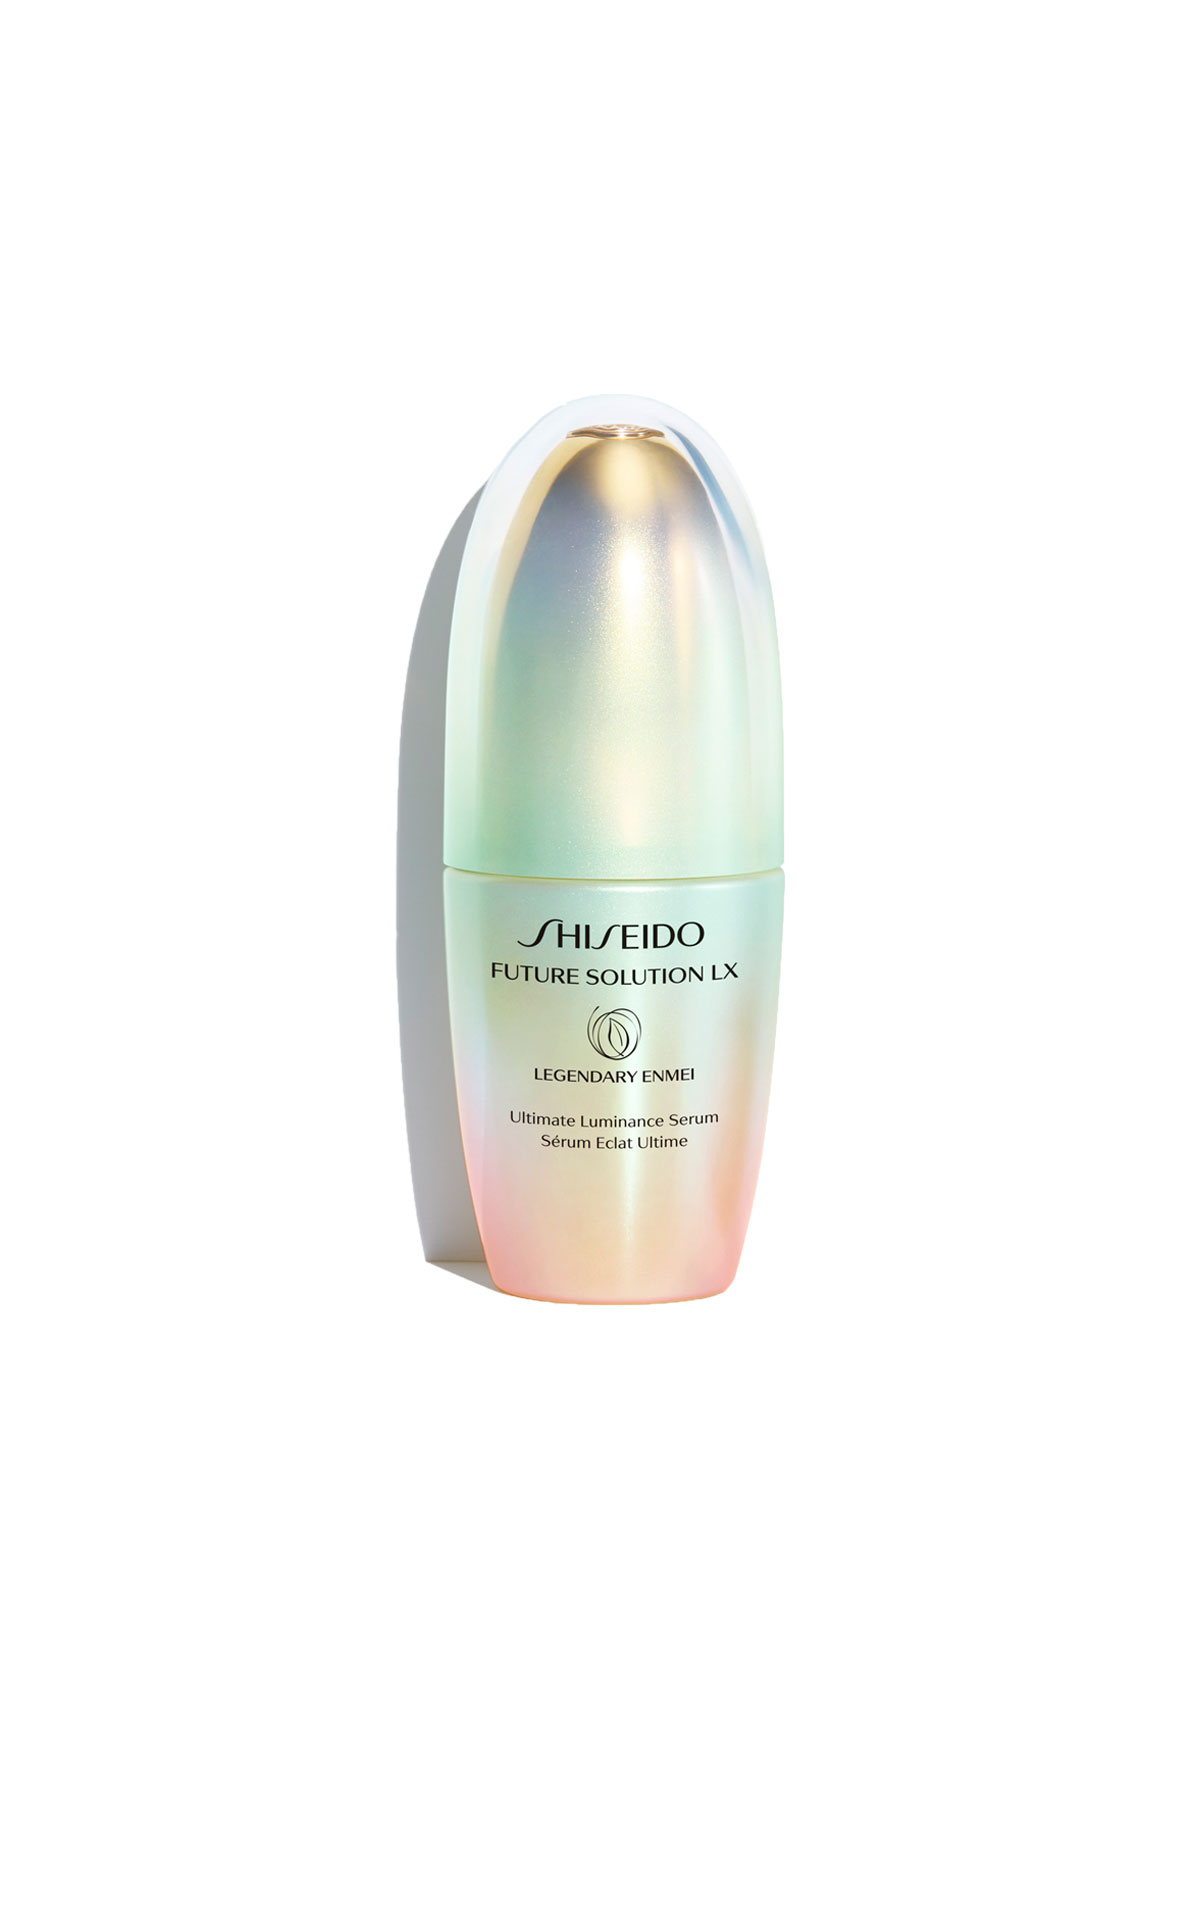 Shiseido Legendary enmei ultimate luminance serum  from Bicester Village